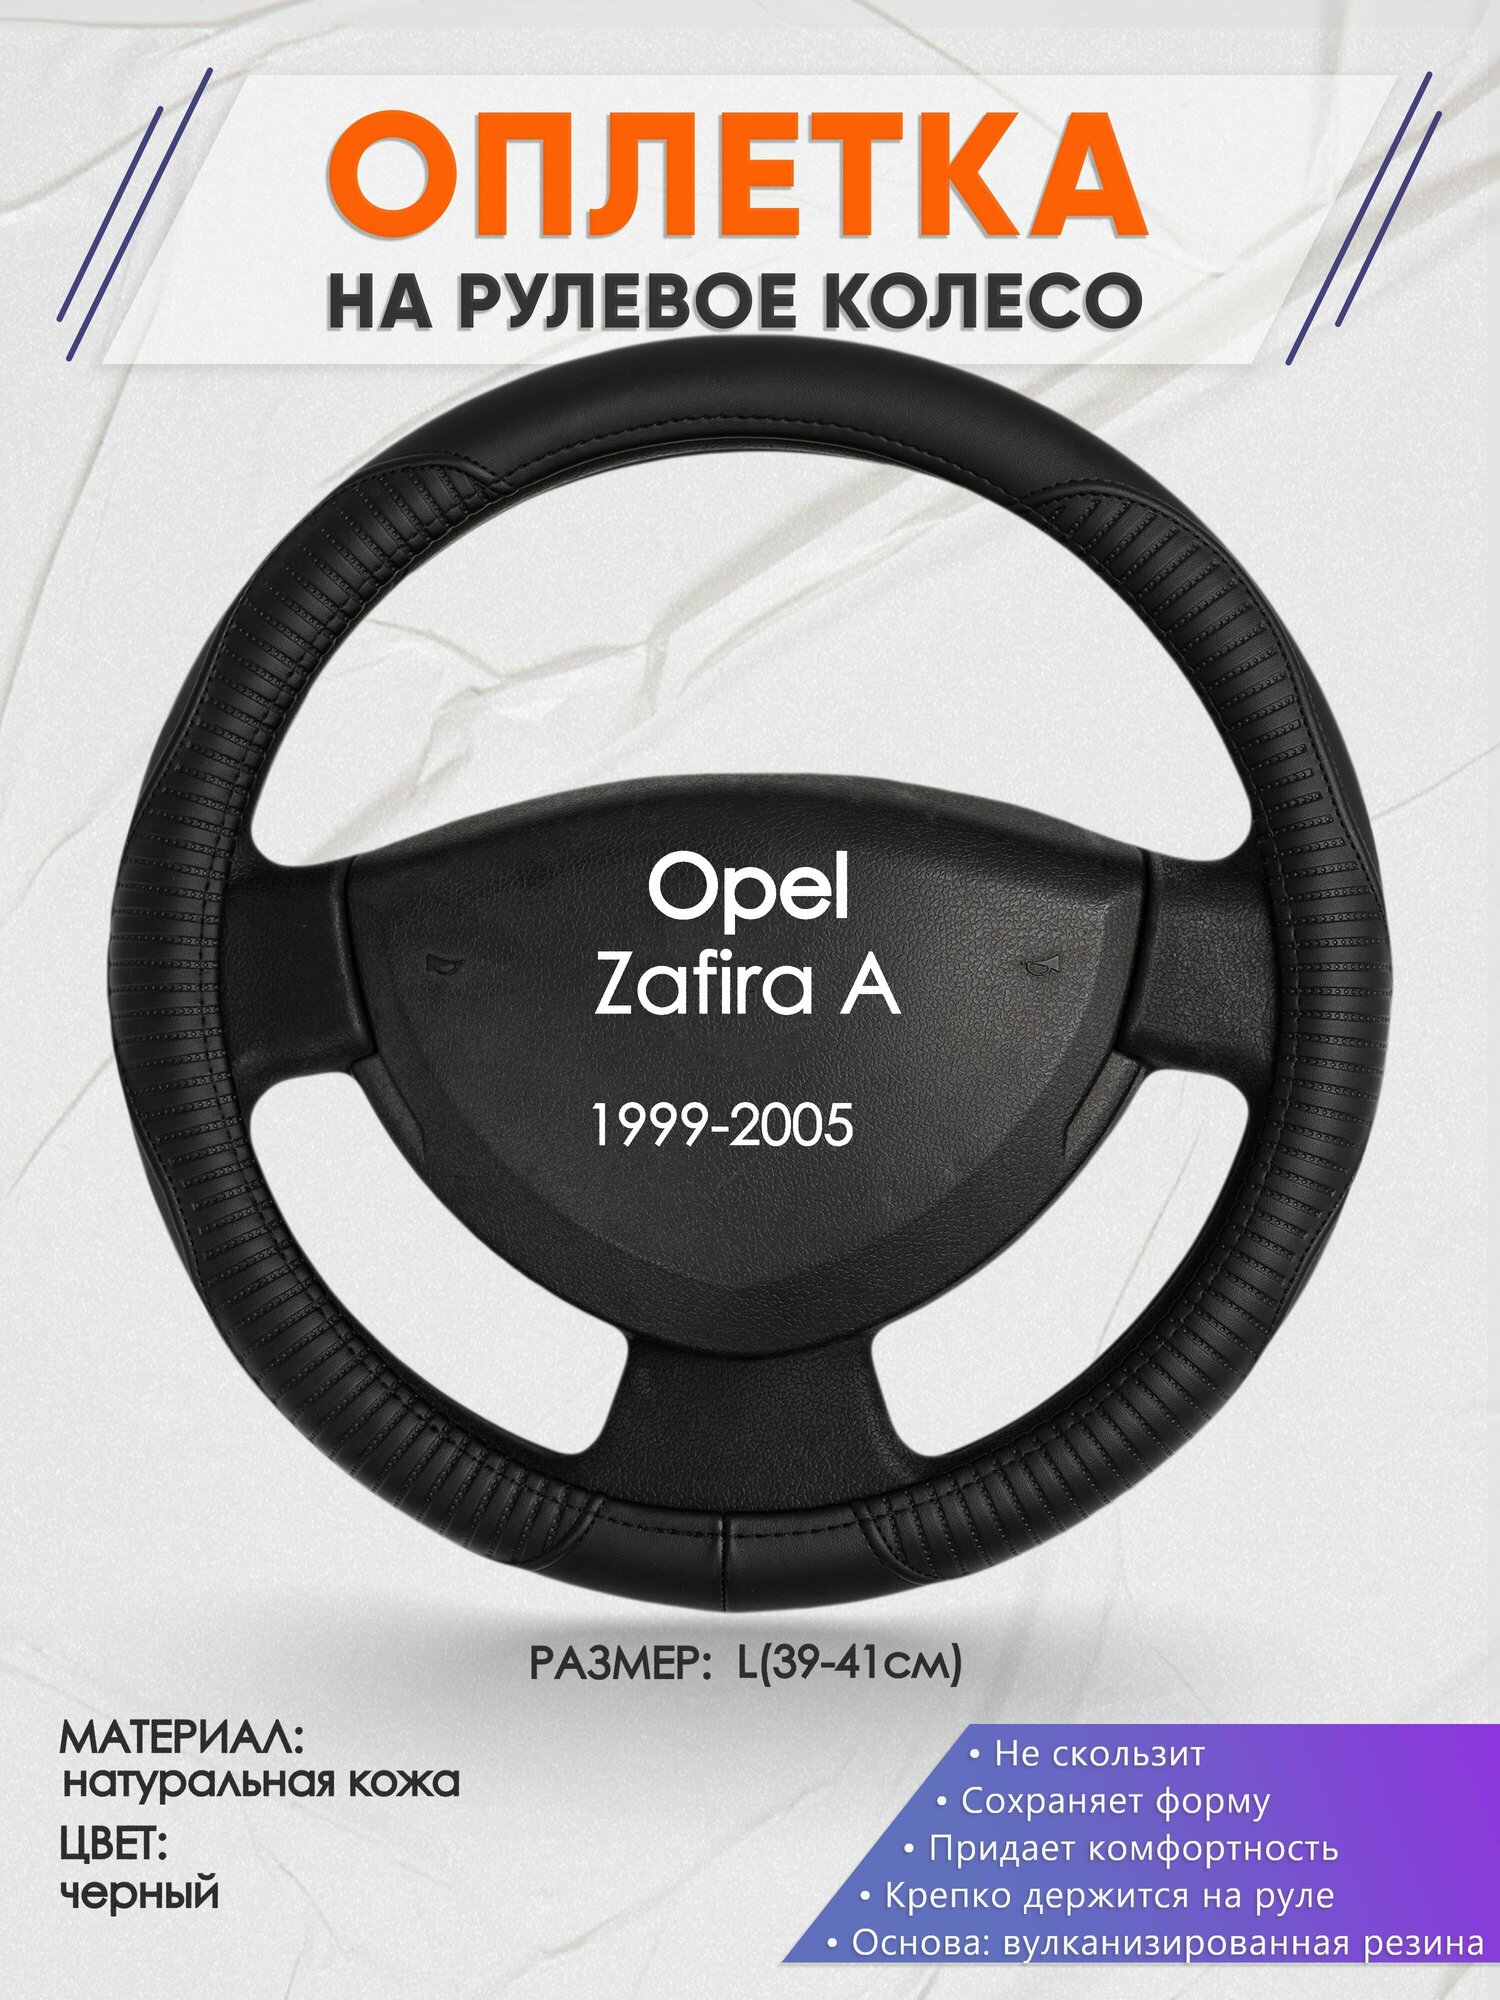 Оплетка на руль для Opel Zafira А(Опель Зафира А) 1999-2005 L(39-41см) Натуральная кожа 89